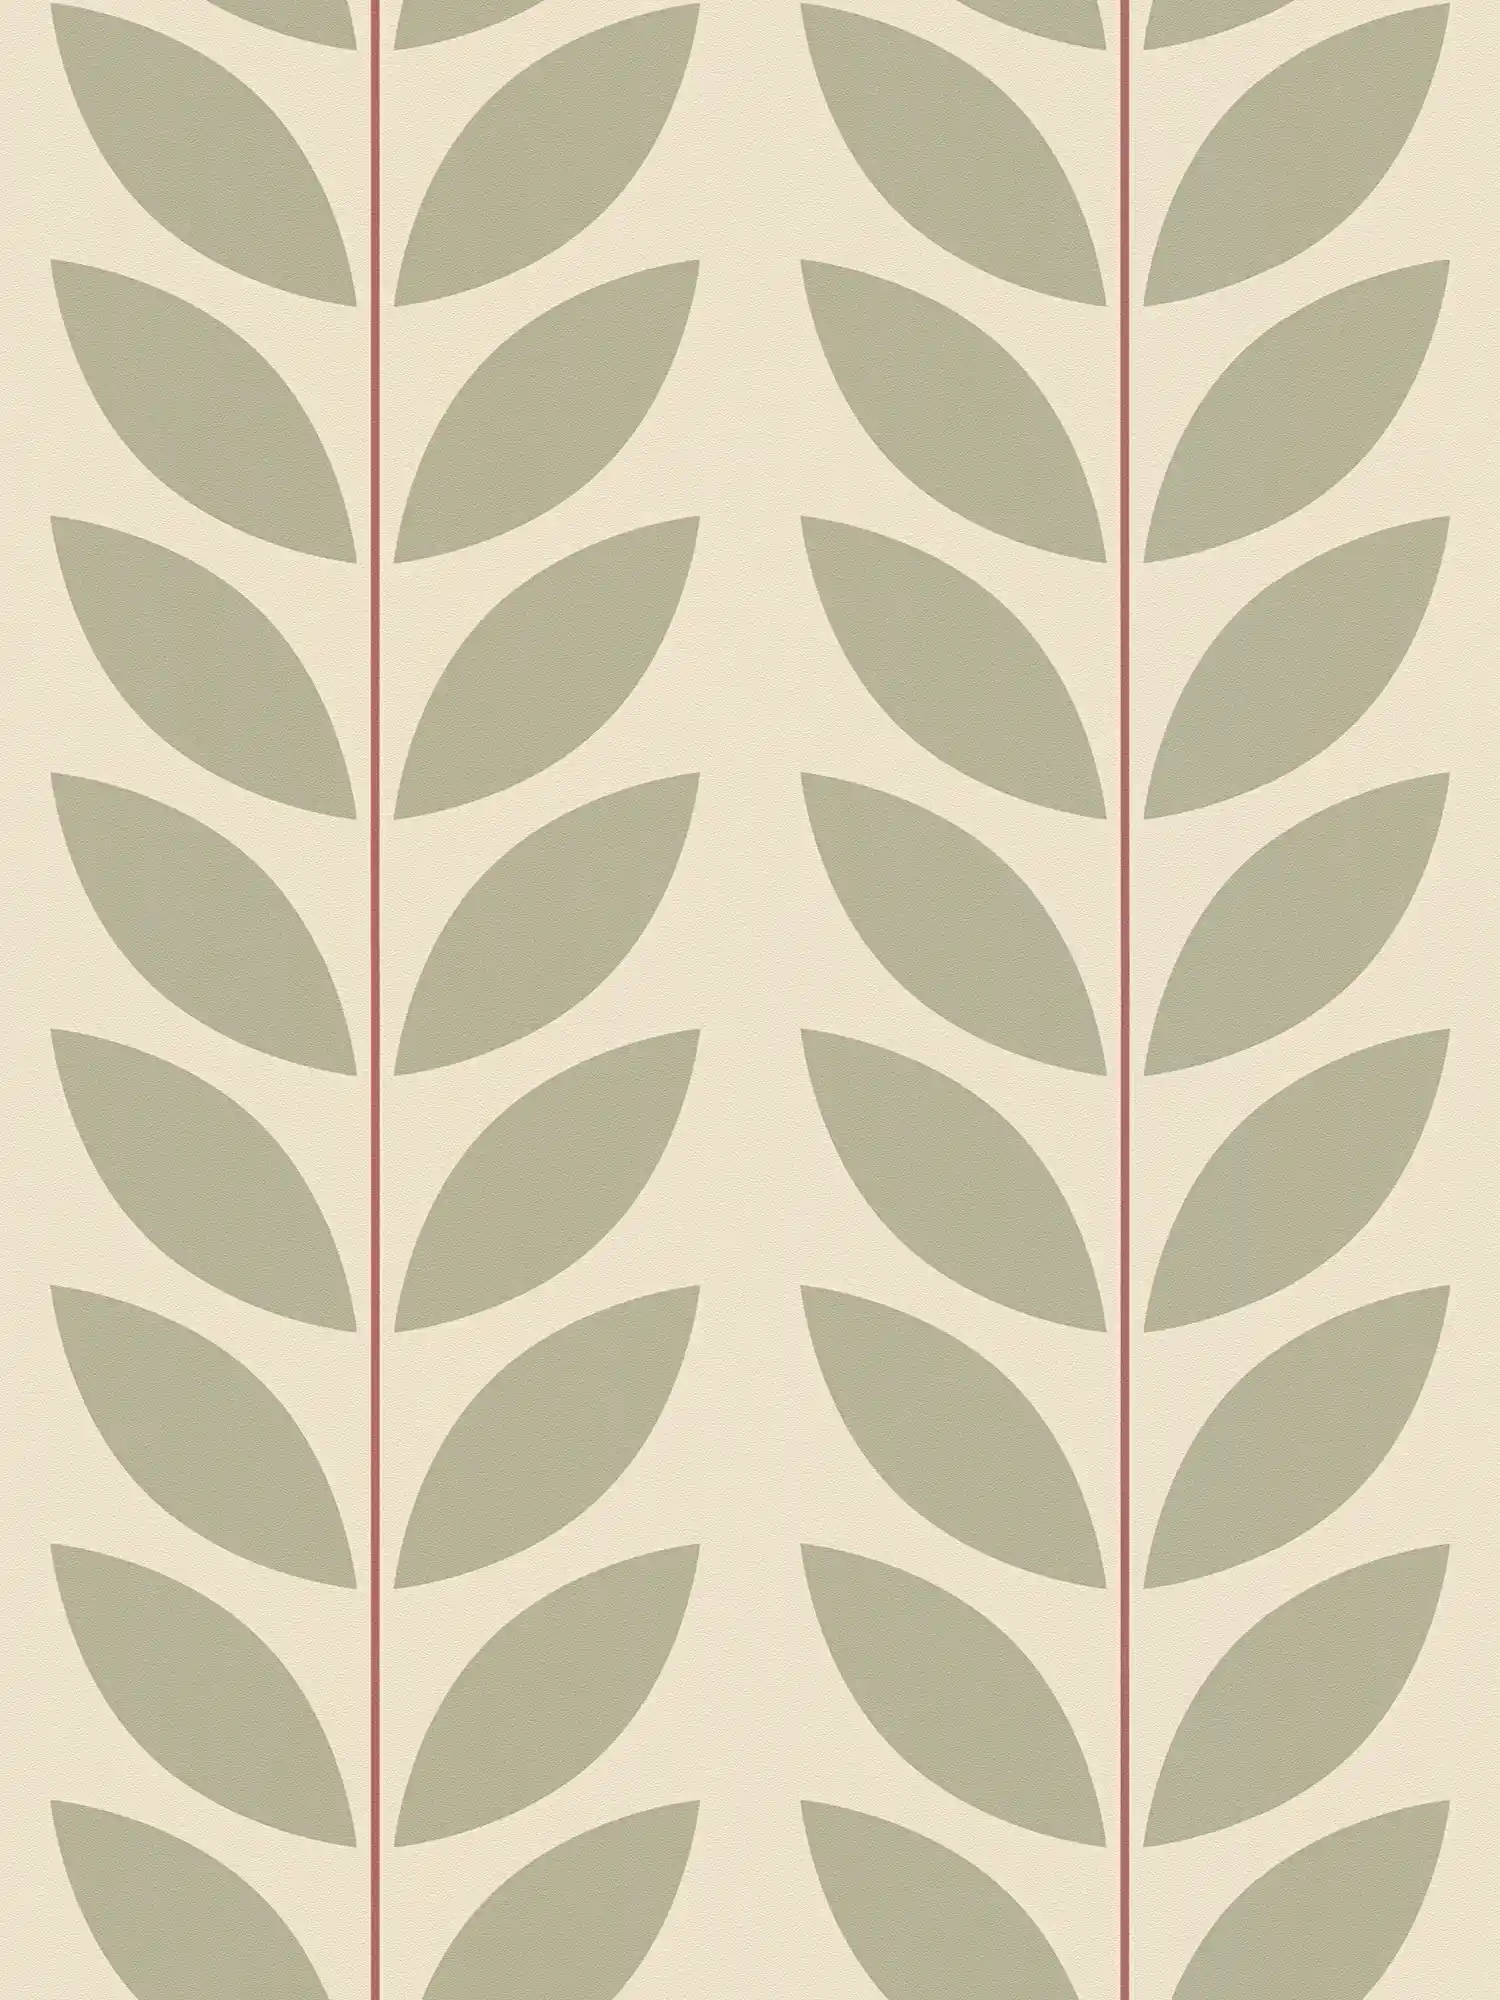         Leaf pattern non-woven wallpaper in retro look - beige, green, red
    